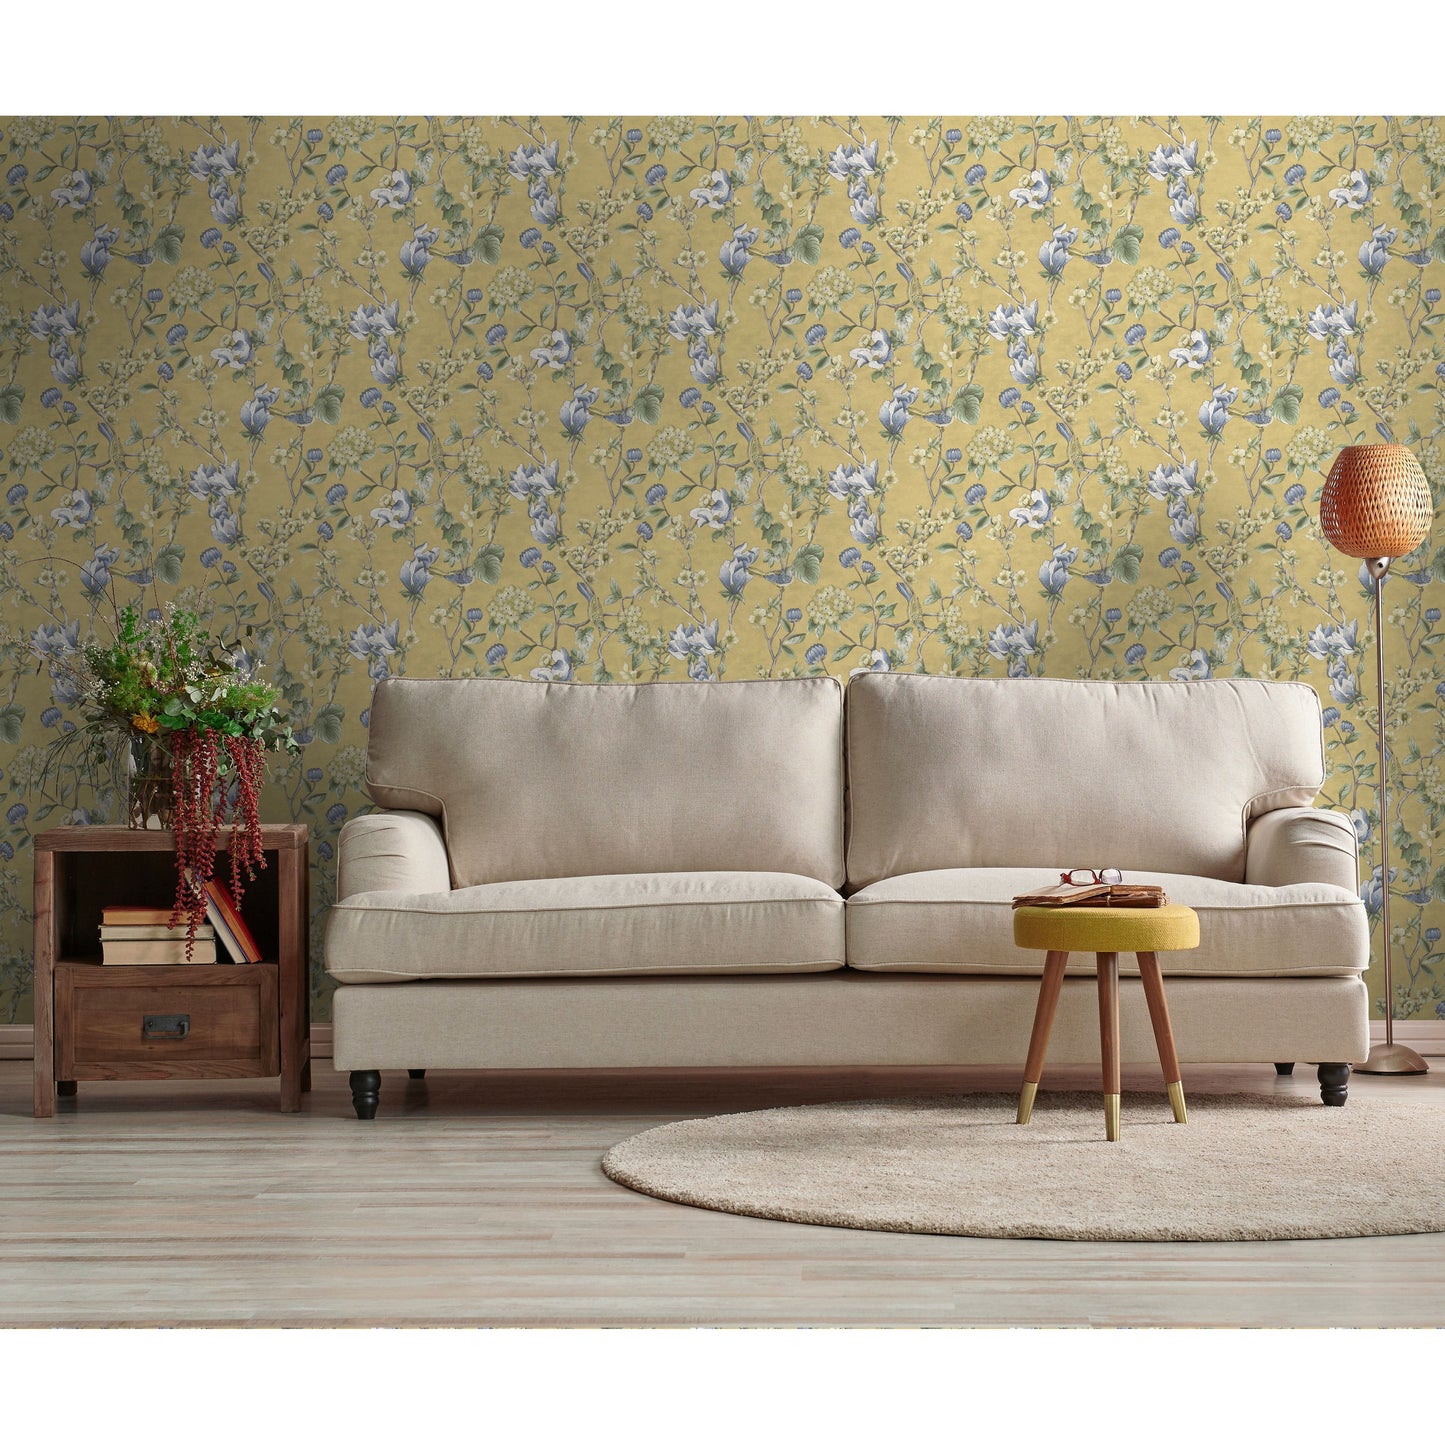 Holden Floral Bird Trail ochre Wallpaper (13601)